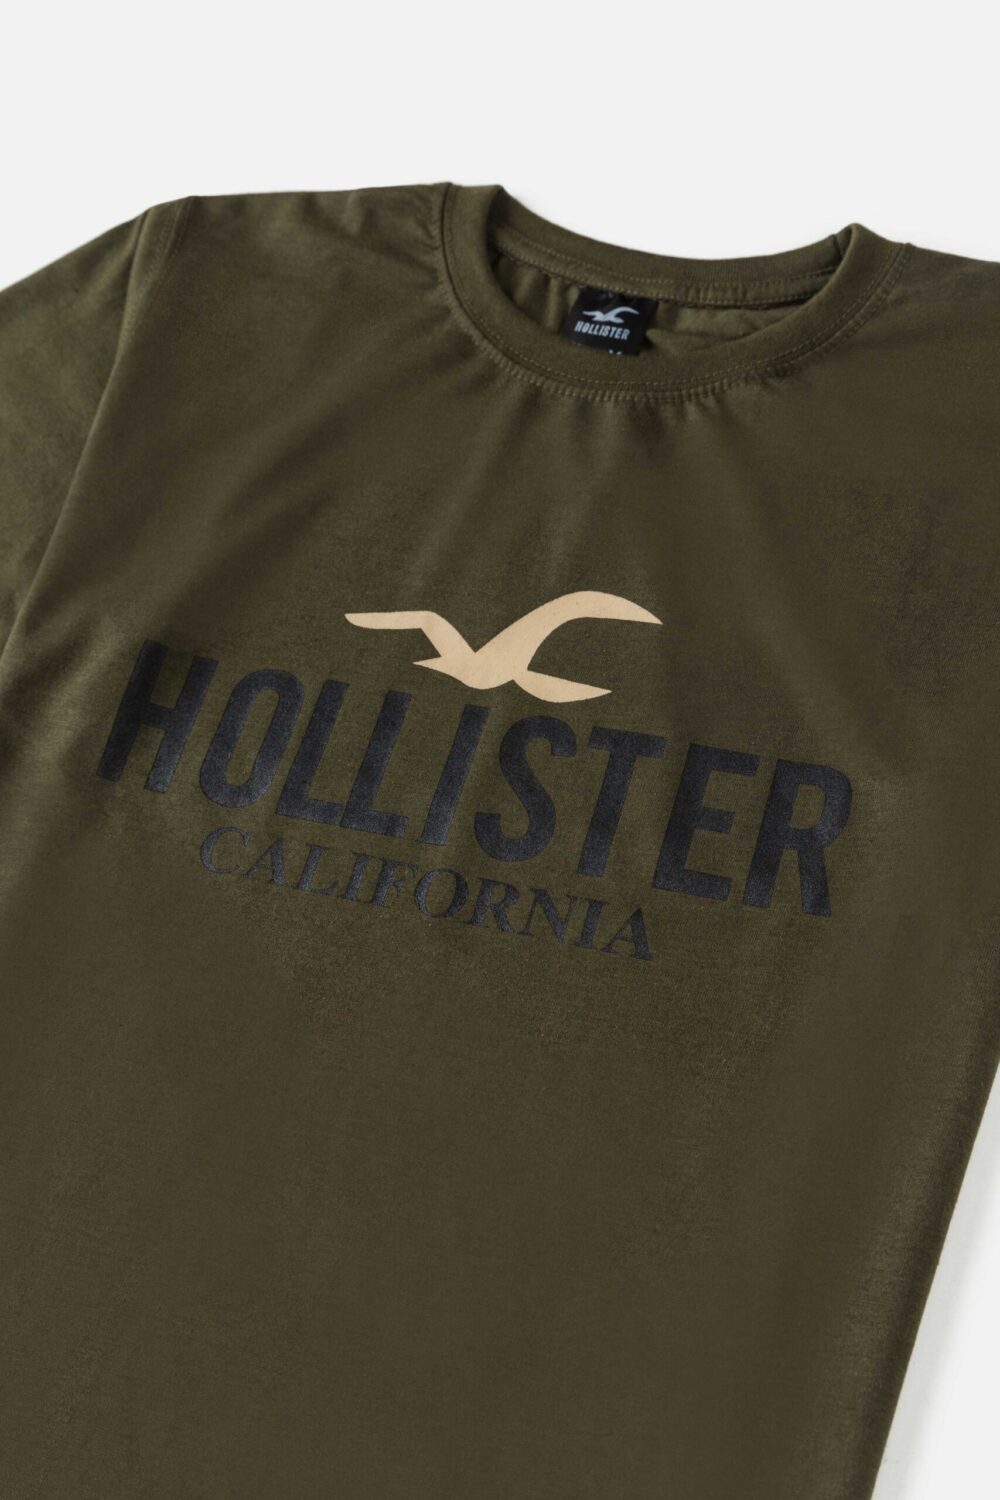 Holister Cotton Print T Shirt – Army Green